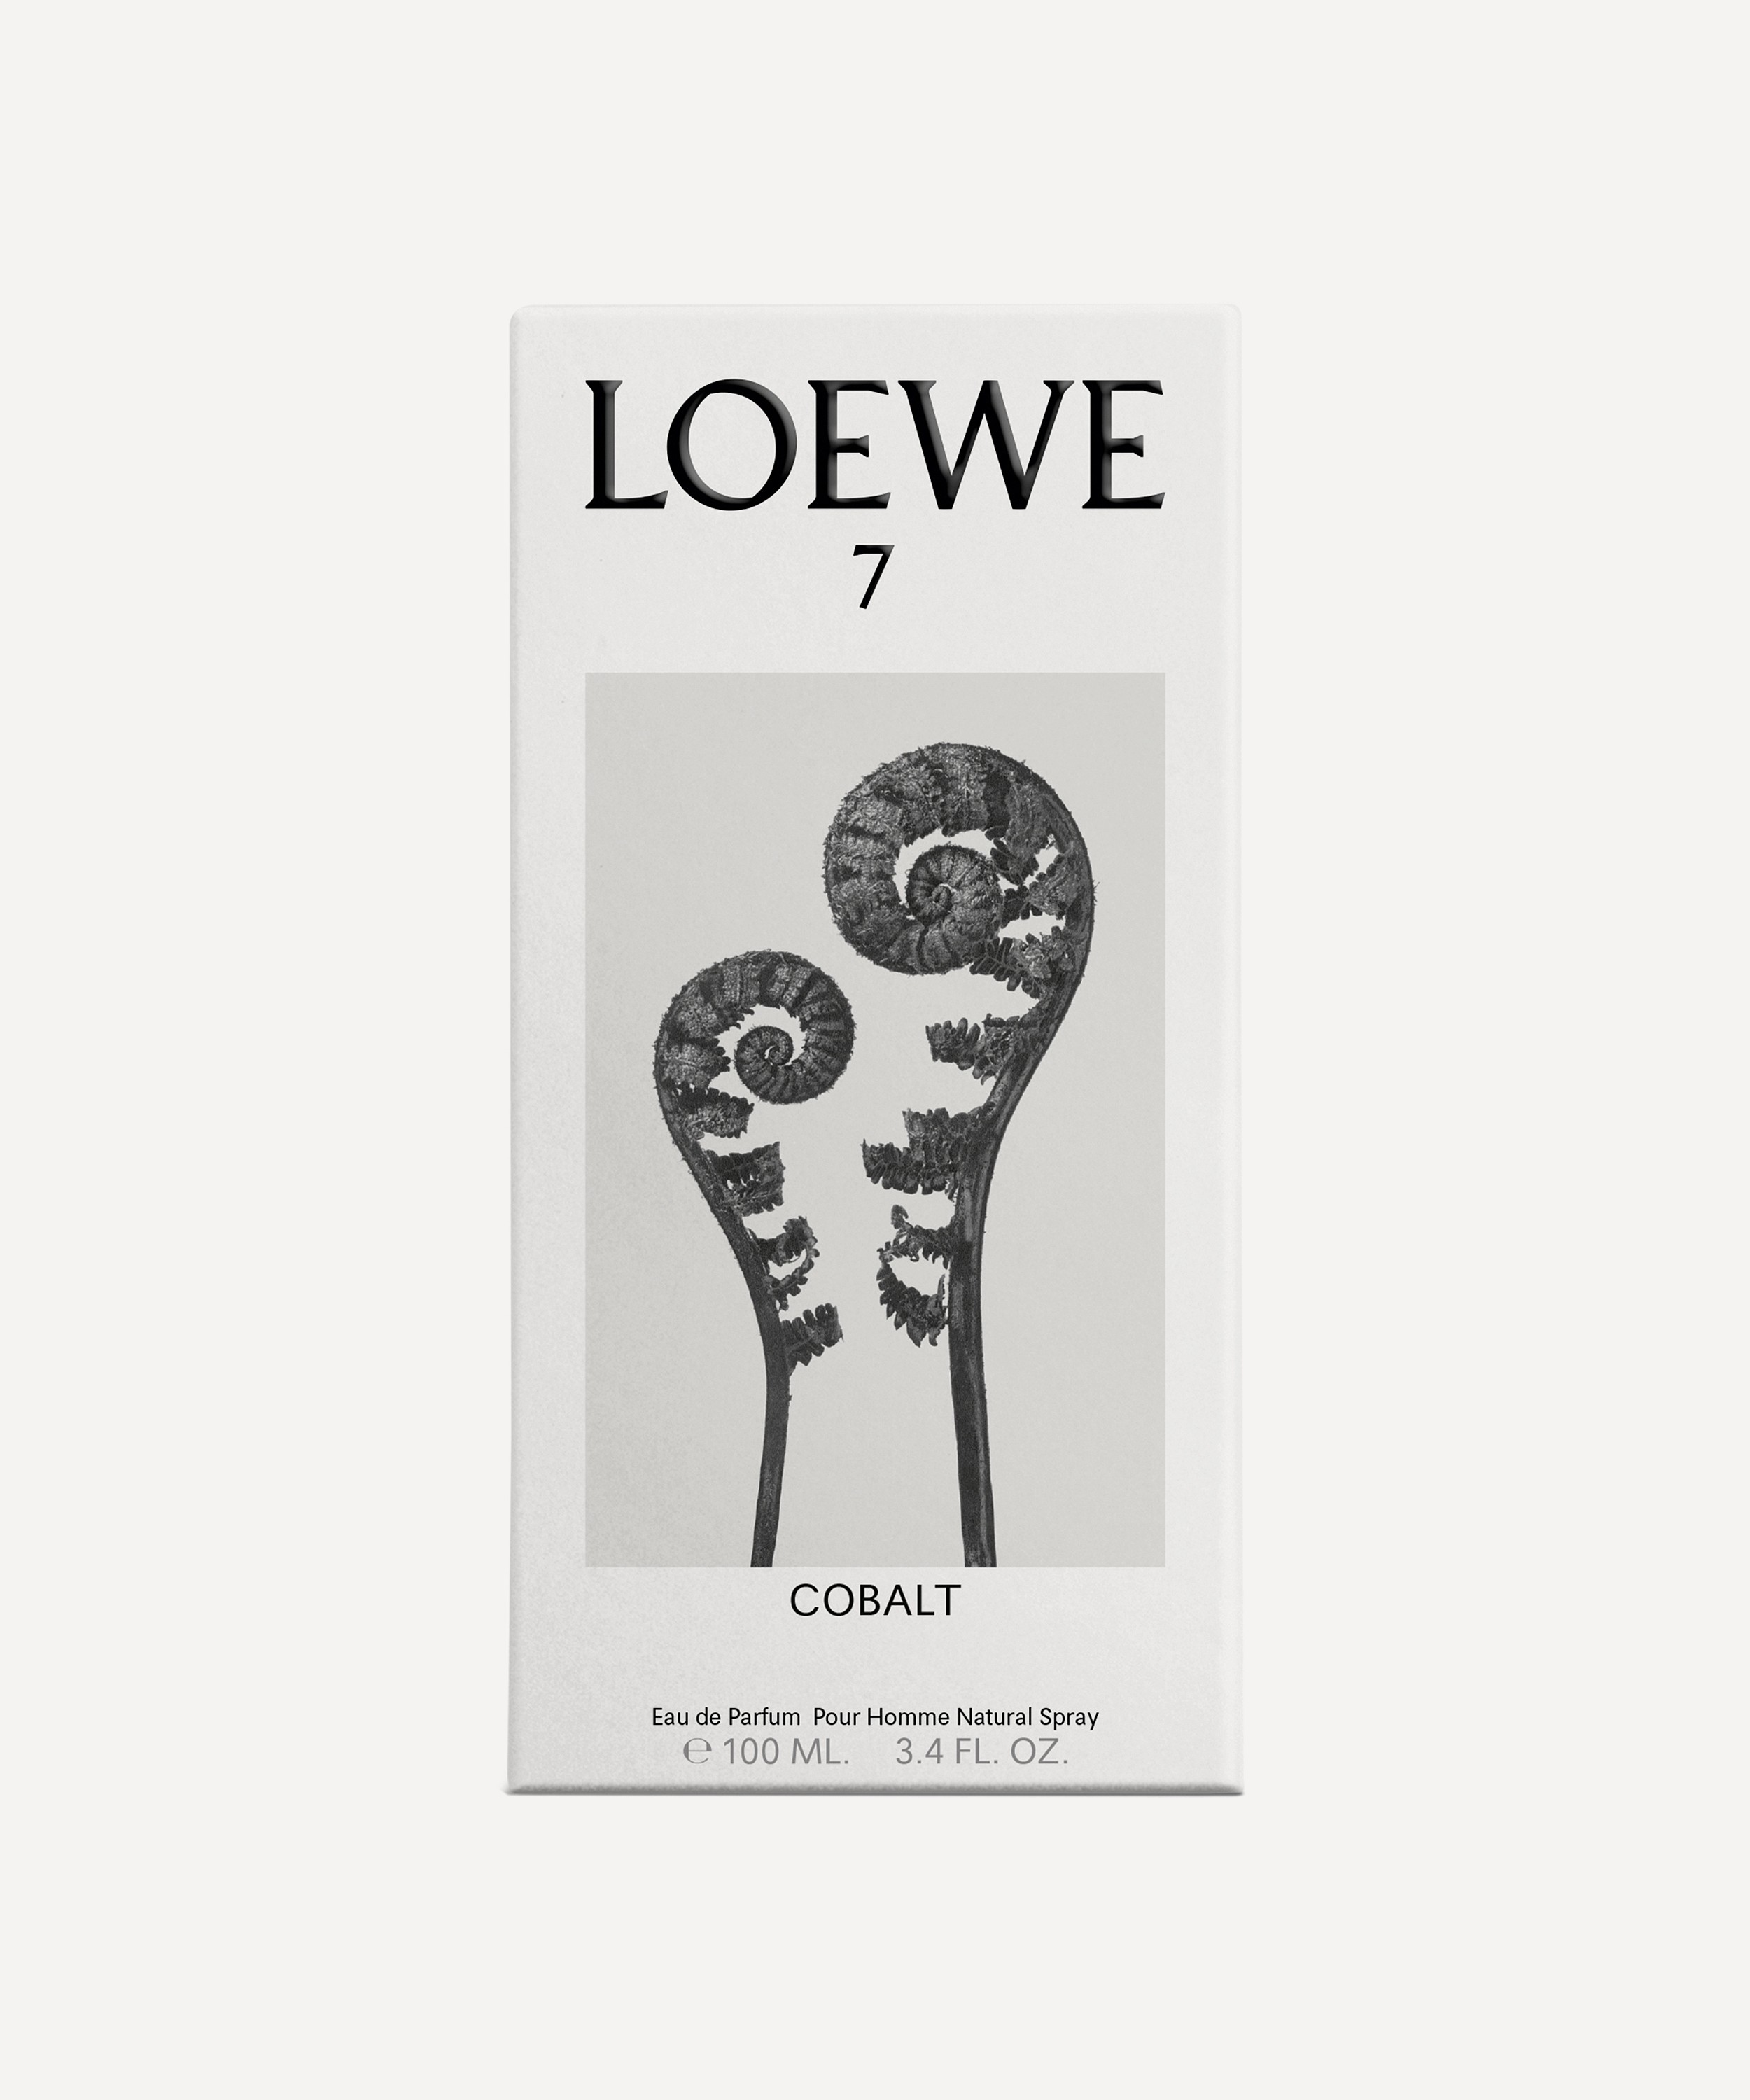 Loewe 7 Cobalt Eau de Parfum 100ml